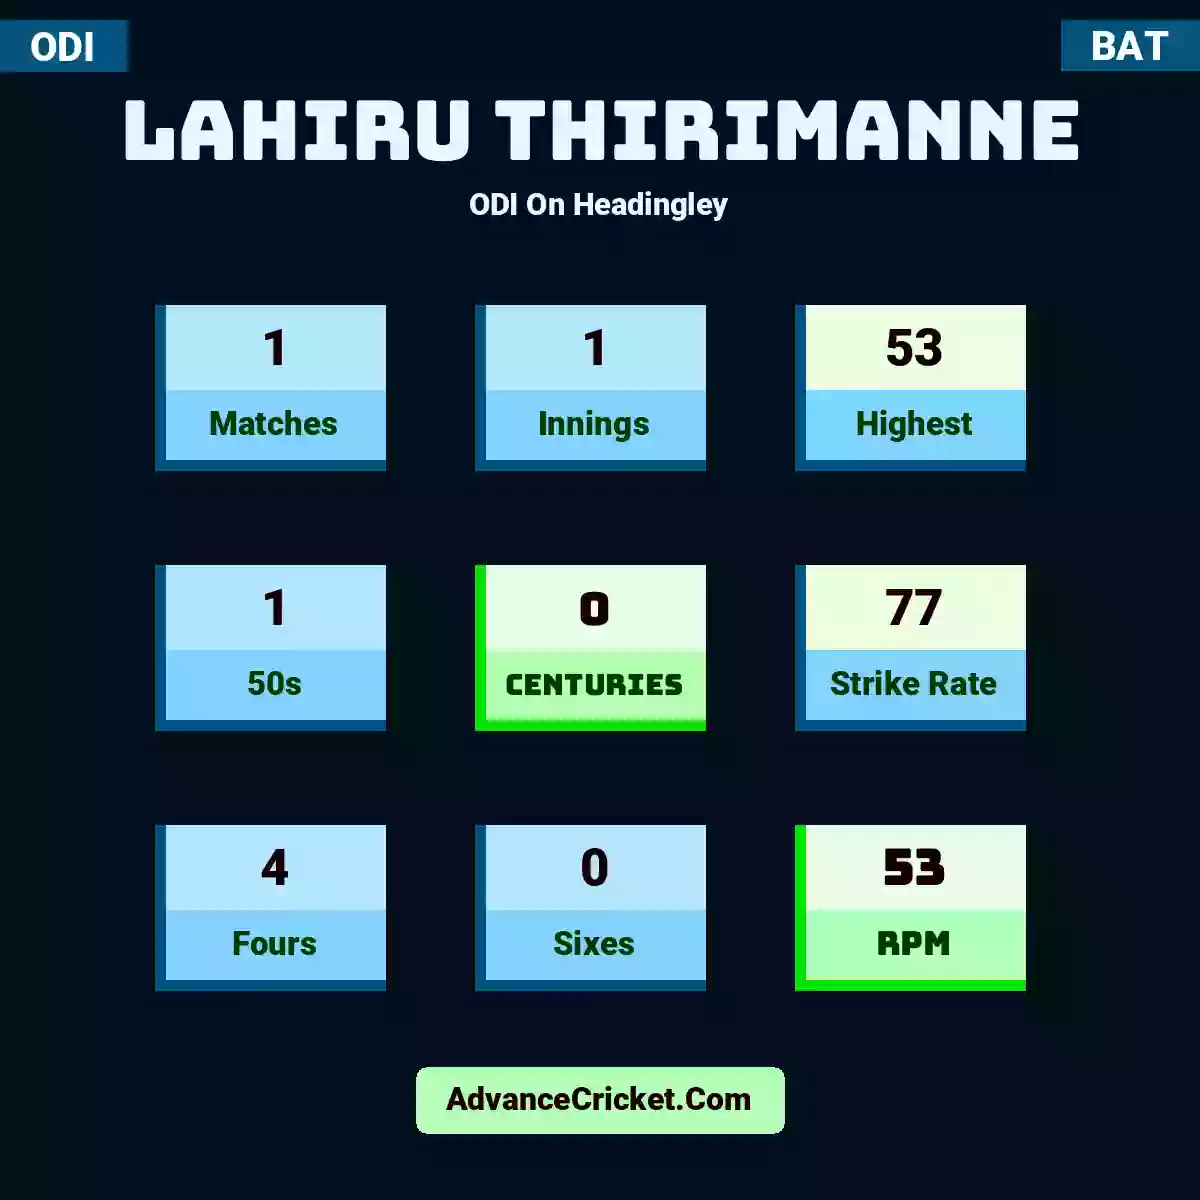 Lahiru Thirimanne ODI  On Headingley, Lahiru Thirimanne played 1 matches, scored 53 runs as highest, 1 half-centuries, and 0 centuries, with a strike rate of 77. L.Thirimanne hit 4 fours and 0 sixes, with an RPM of 53.